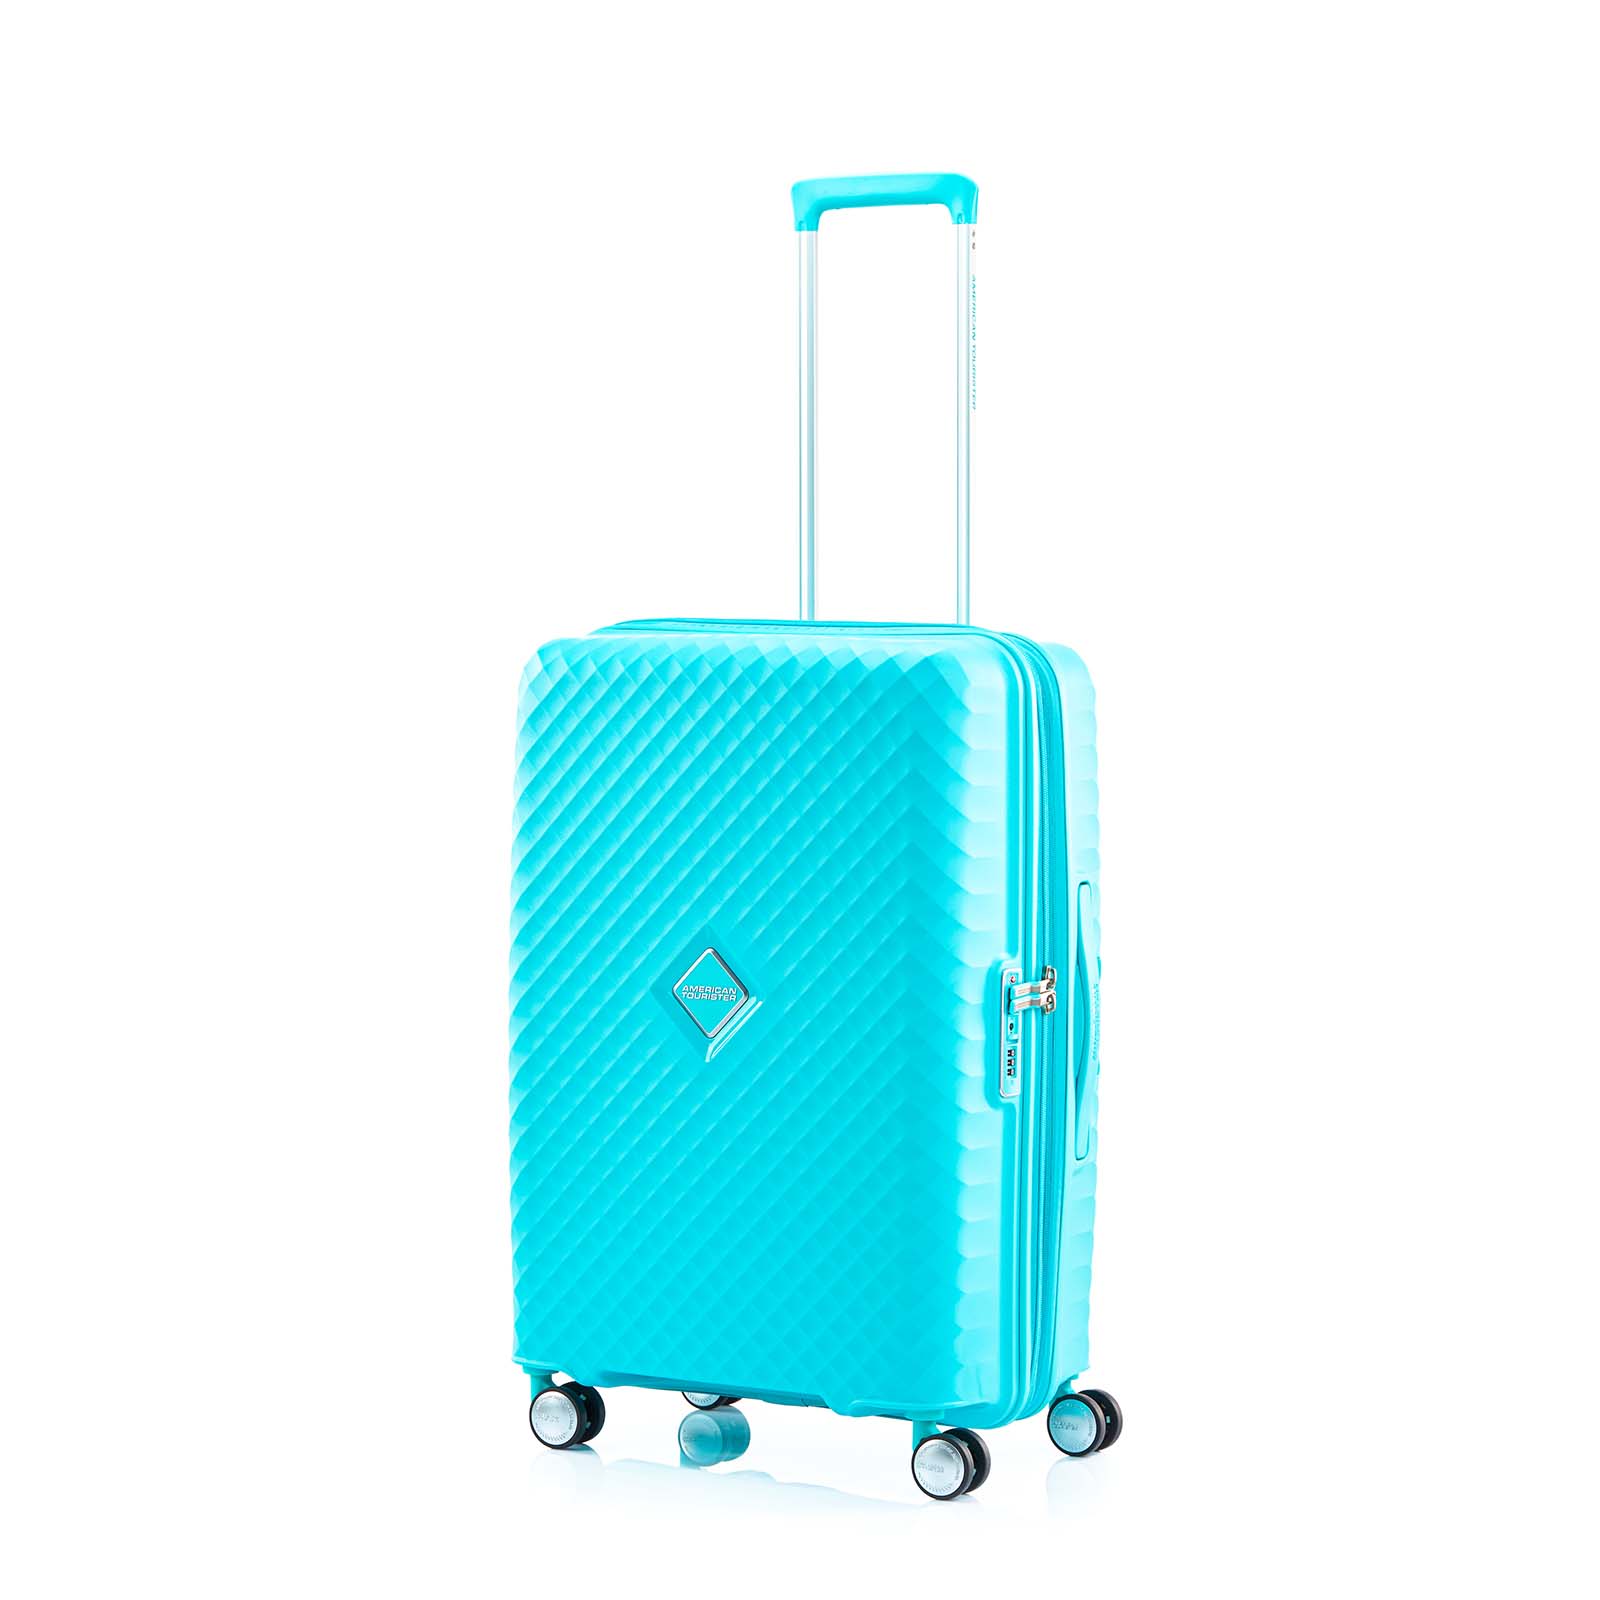 American-Tourister-Squasem-66cm-Suitcase-Aqua-Blue-Front-Angle